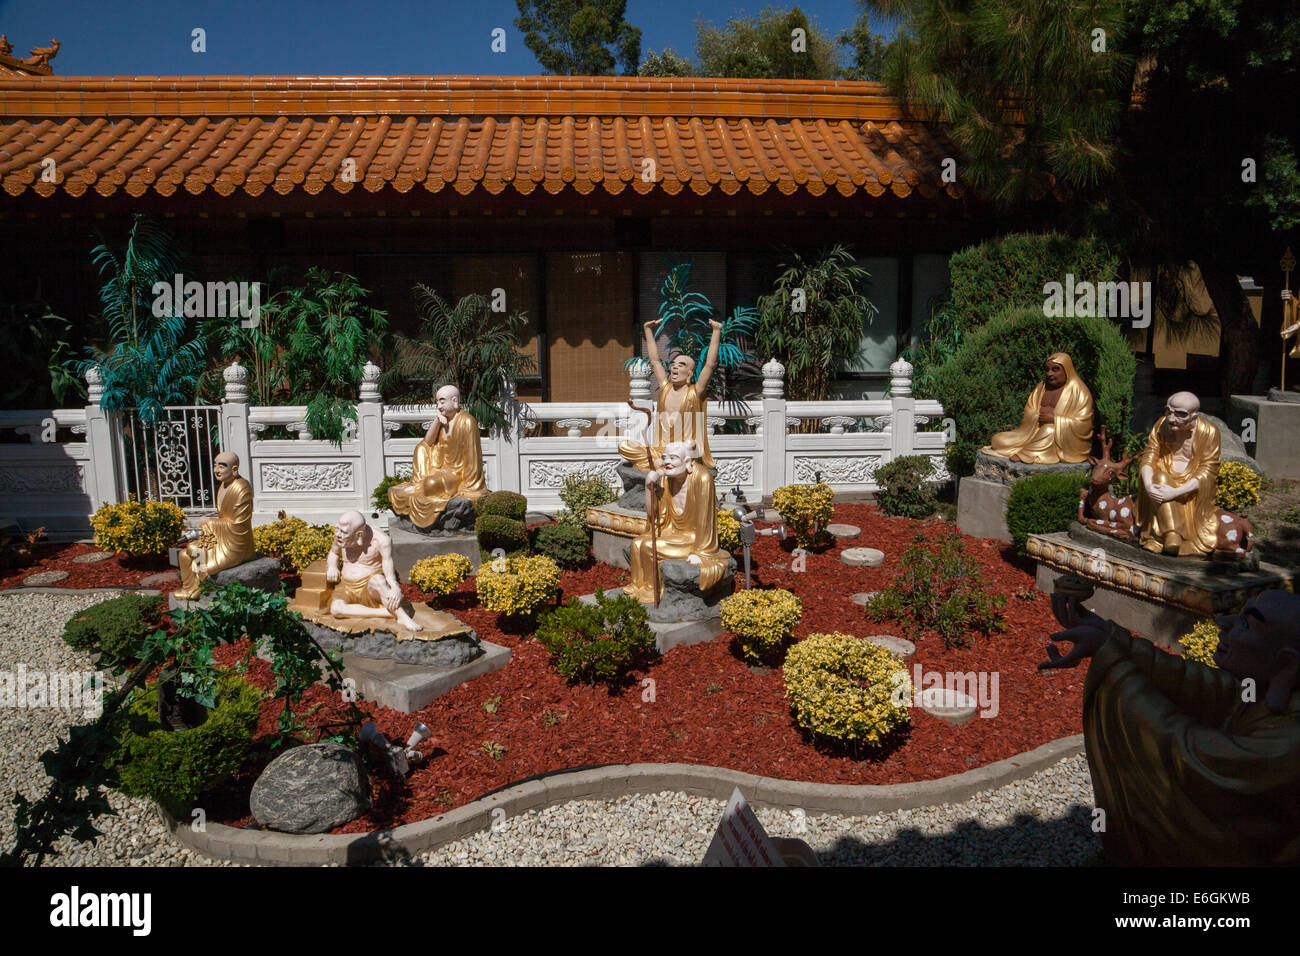 L'Arhat Garden à Hsi Lai temple Buddhis, disciples du Bouddha, Hacienda Heights, Californie, USA Banque D'Images